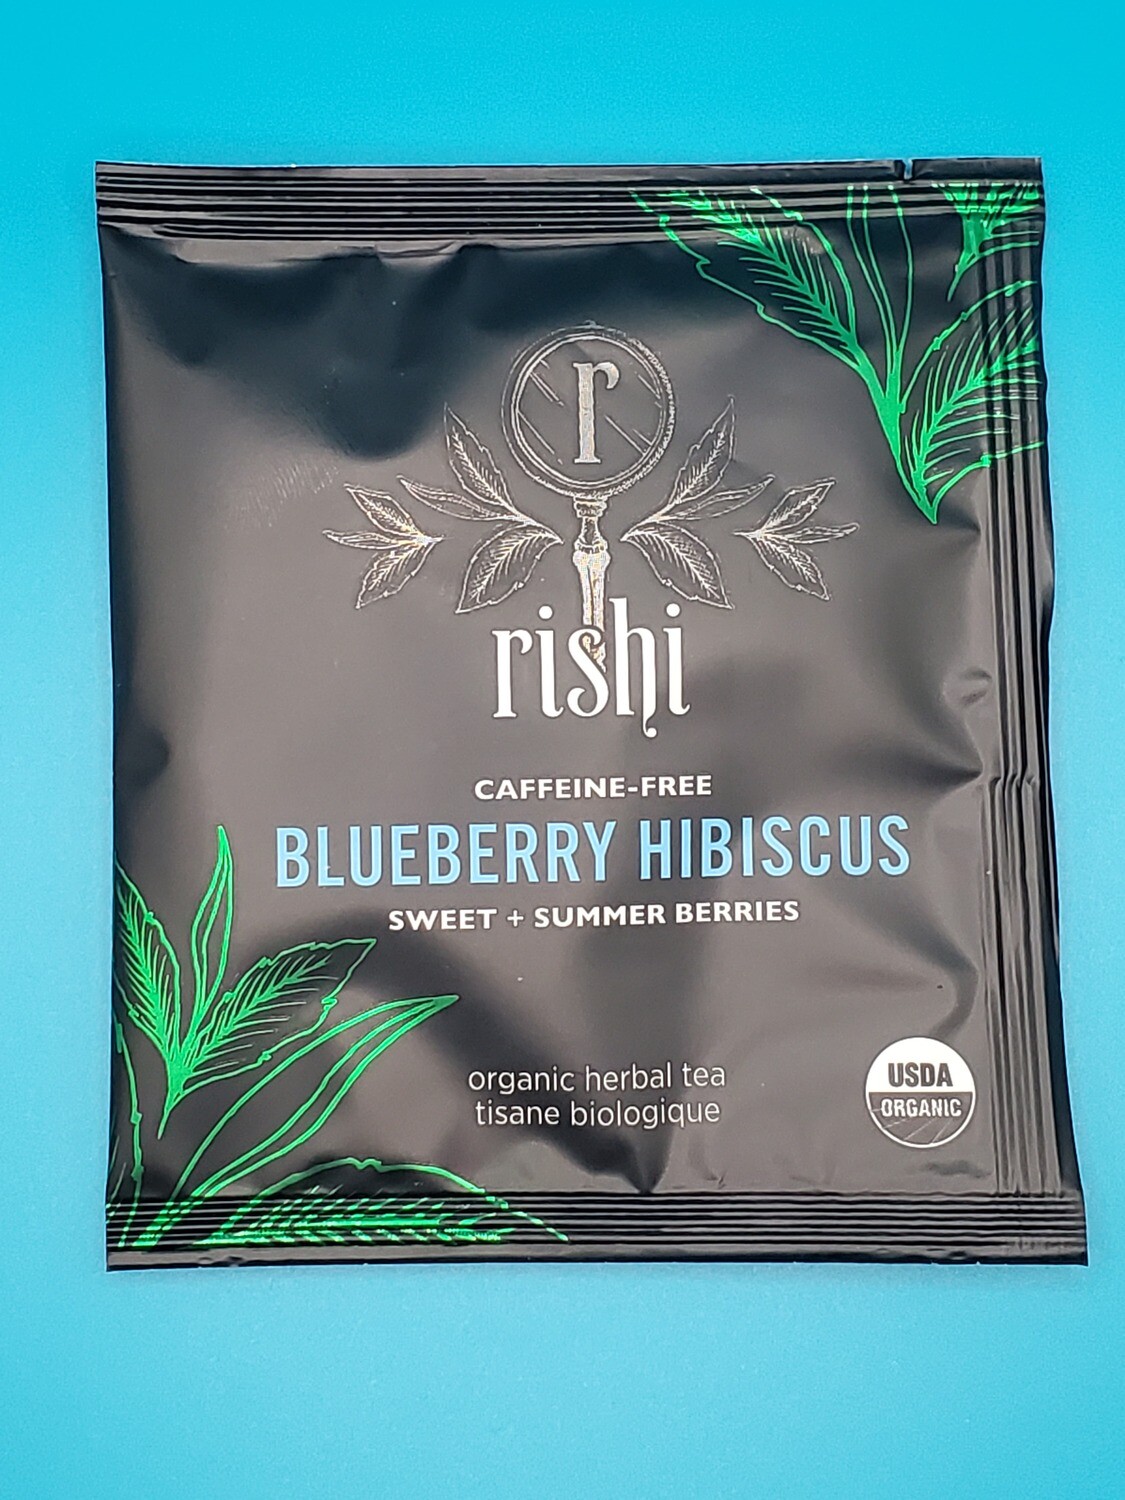 Rishi Blueberry Hibiscus Tea